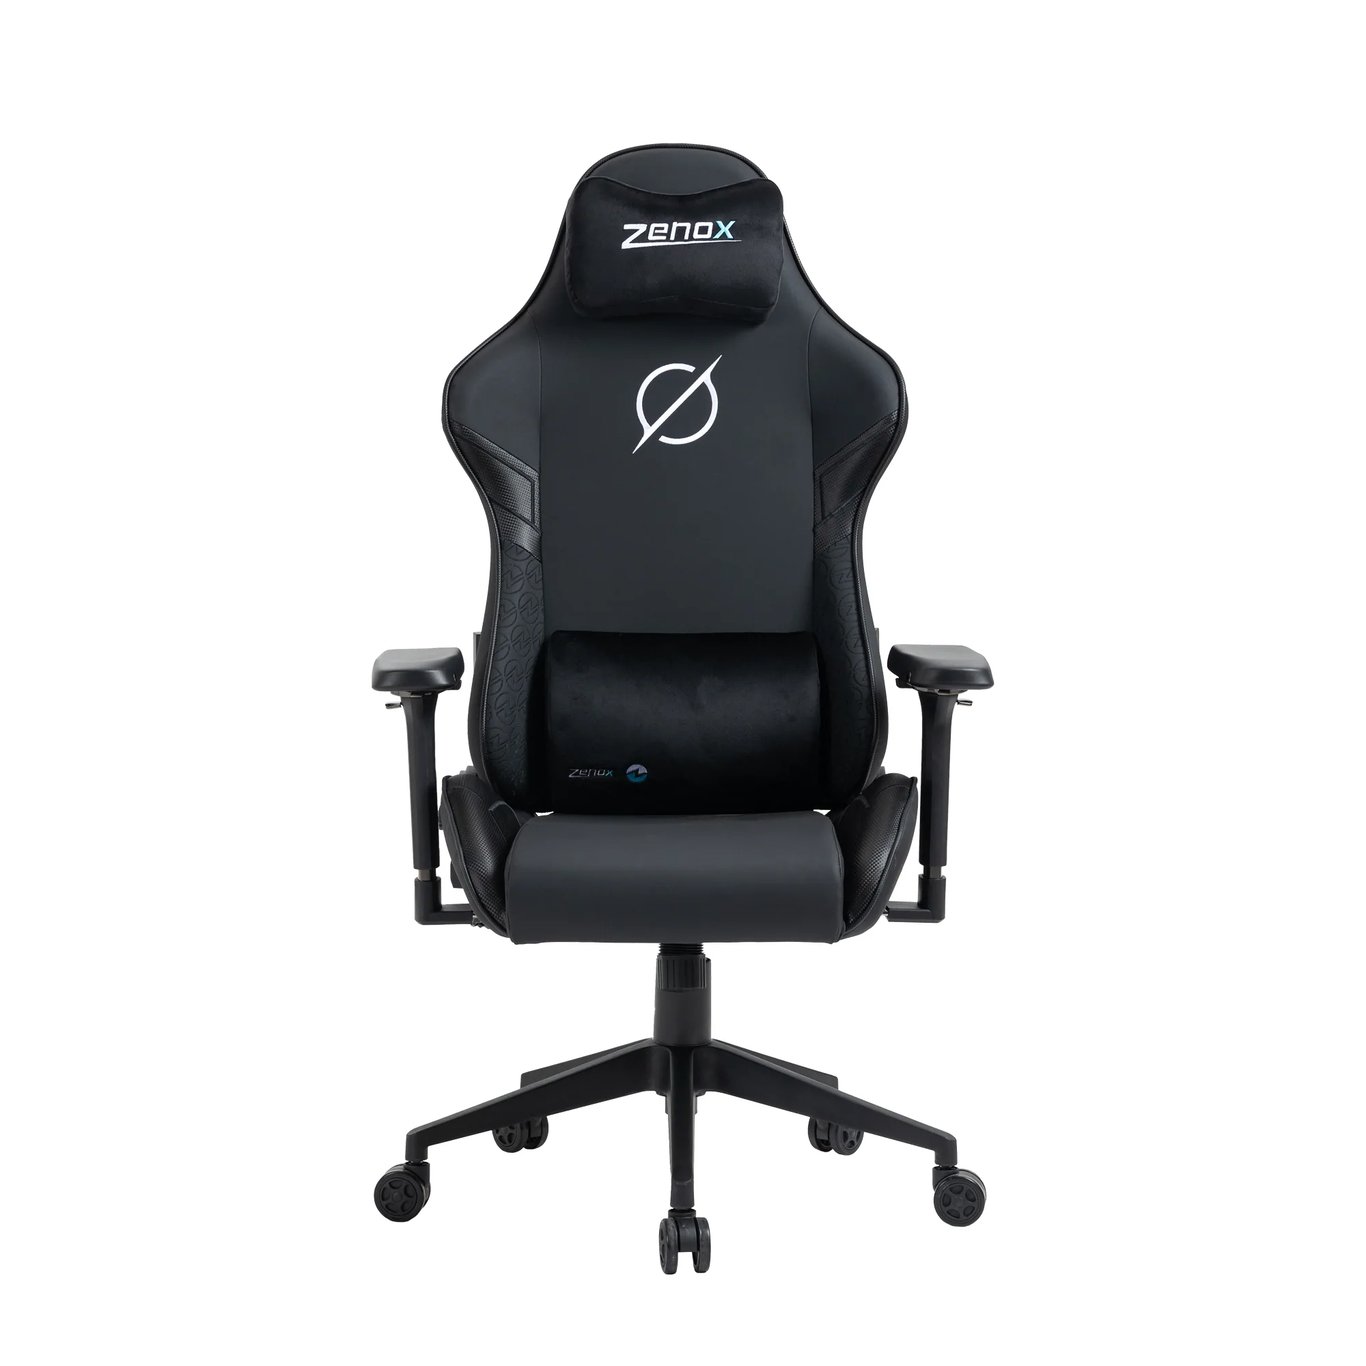 Zenox Saturn-MK2 Racing Chair  - Leather/Carbon /-1